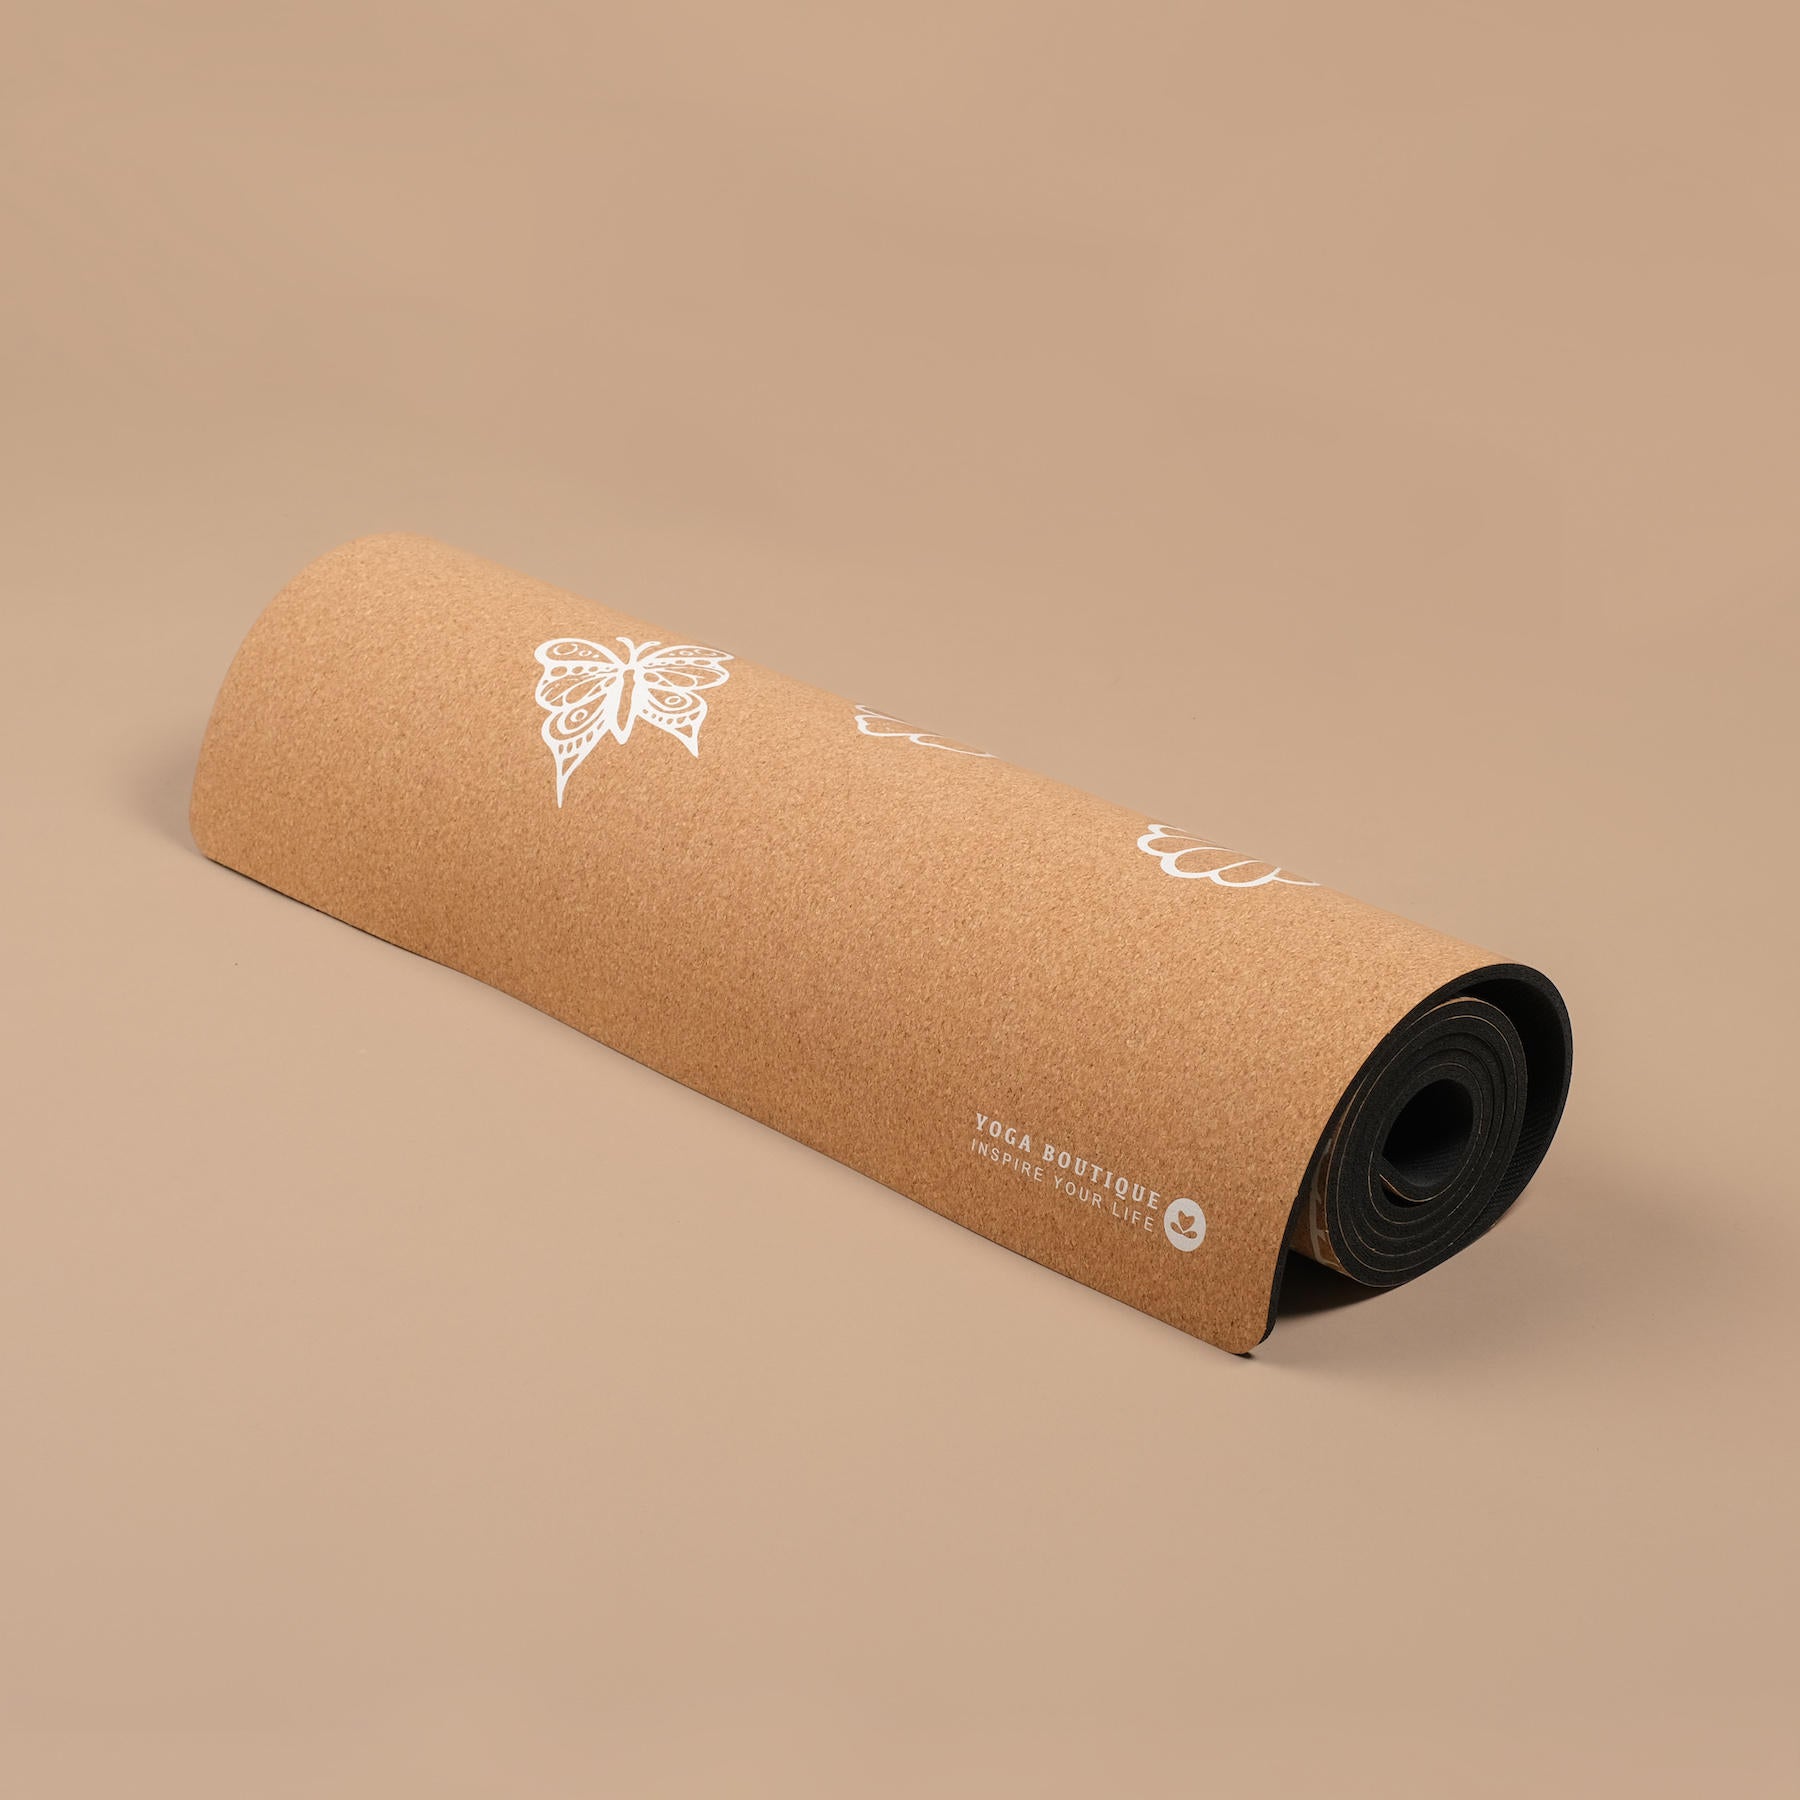 Tappetino da yoga Cork Tropical bianco senza PVC, biodegradabile